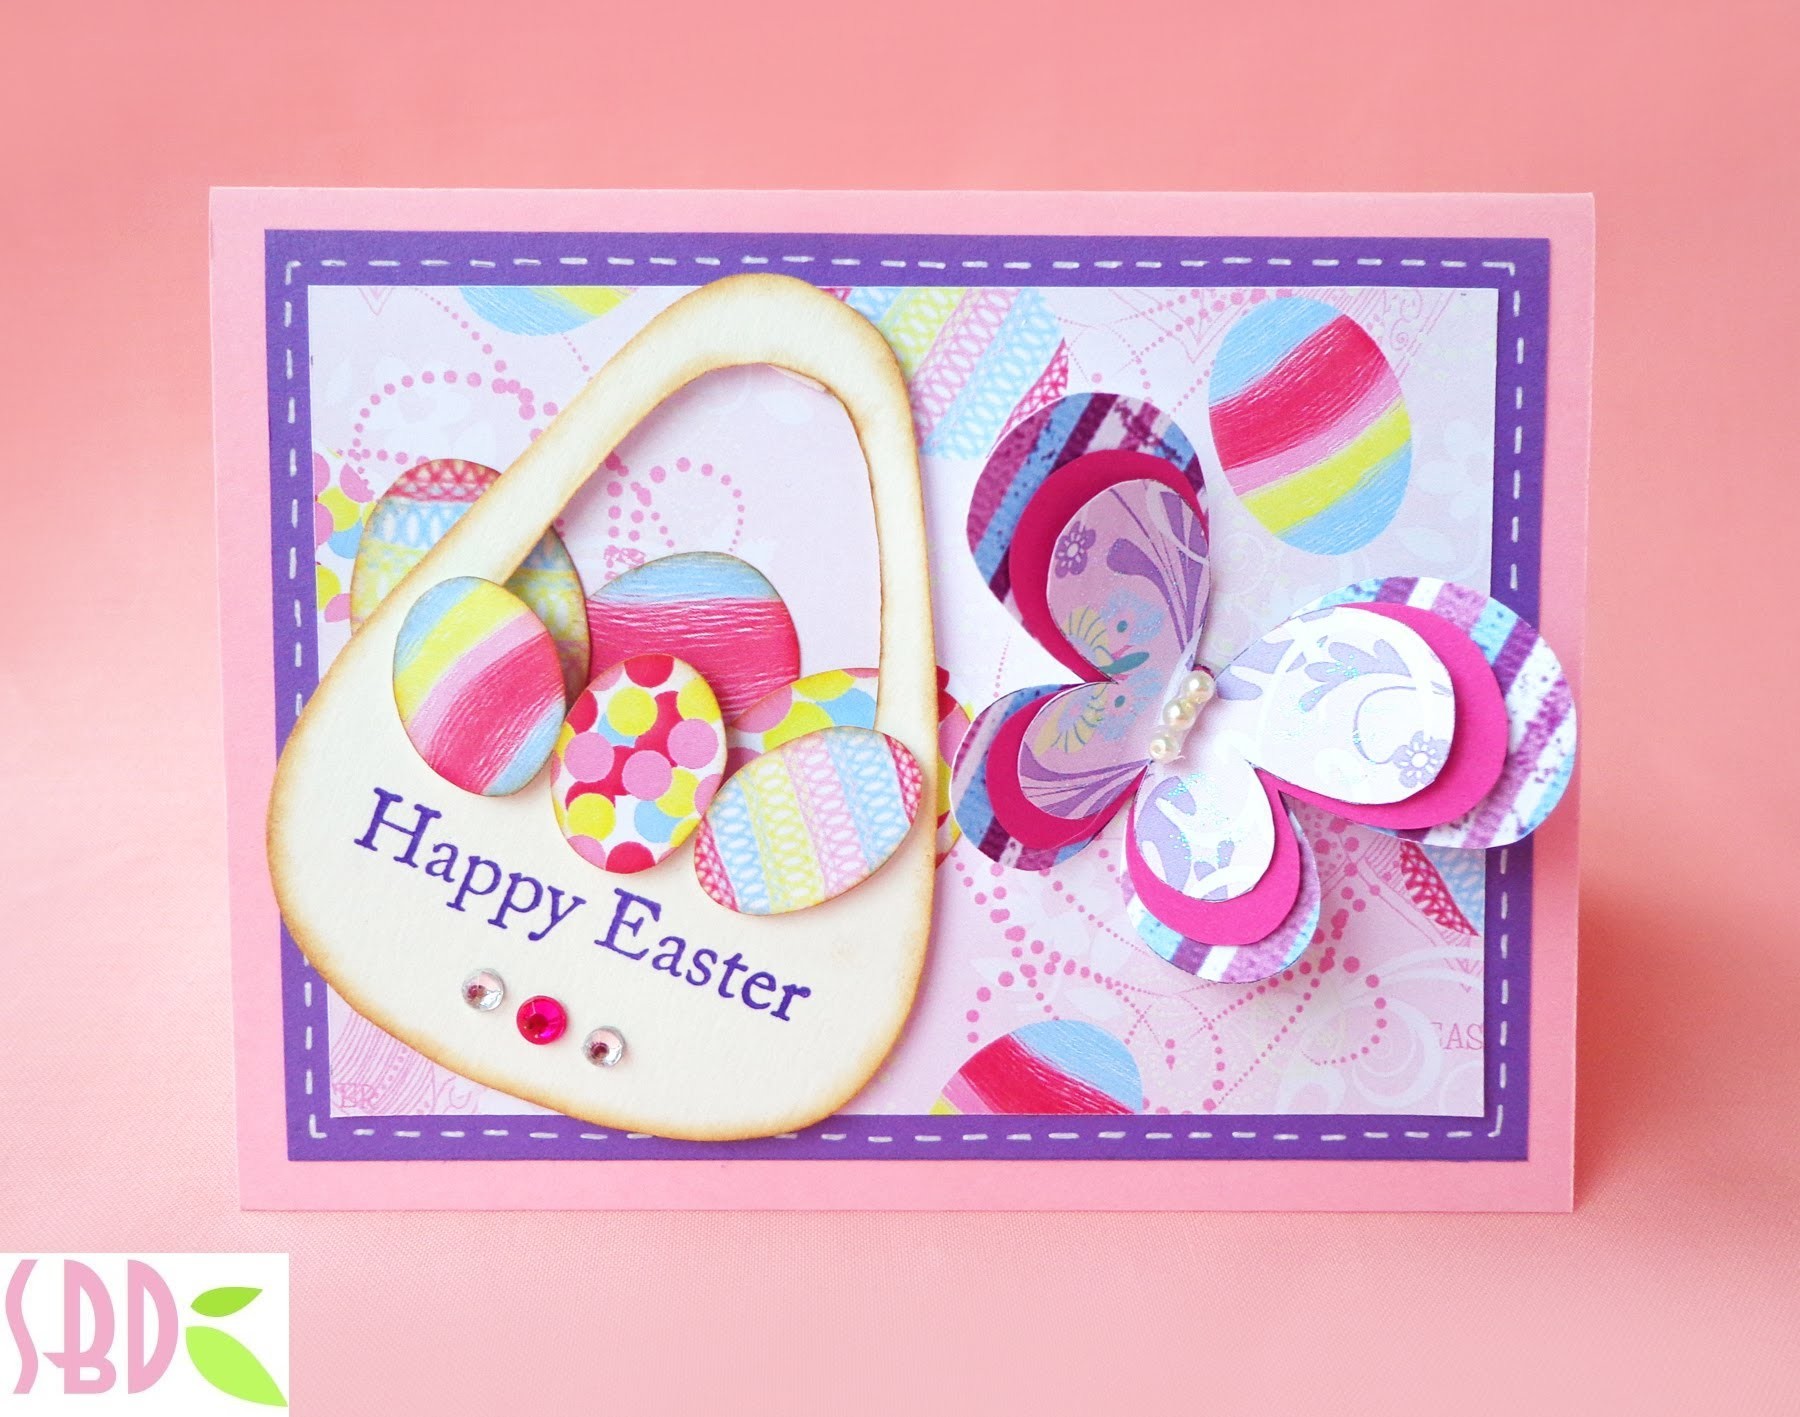 Card Auguri di Pasqua - Easter Wishes Card [ENG SUB]